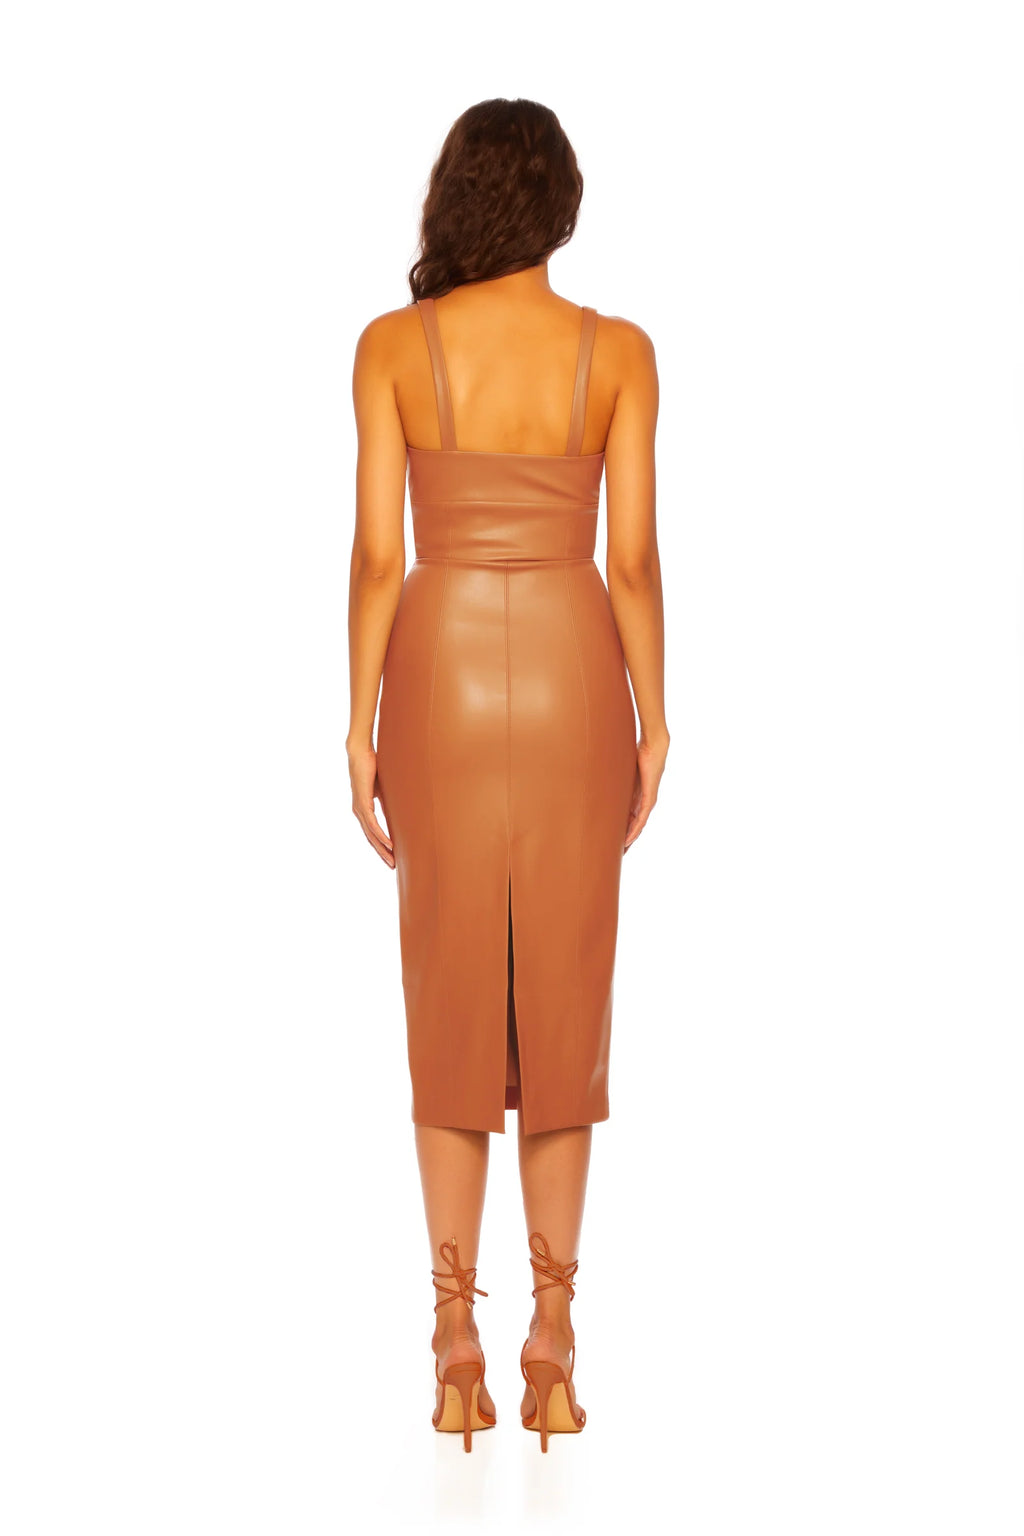 Susana Monaco Faux Leather V Dress